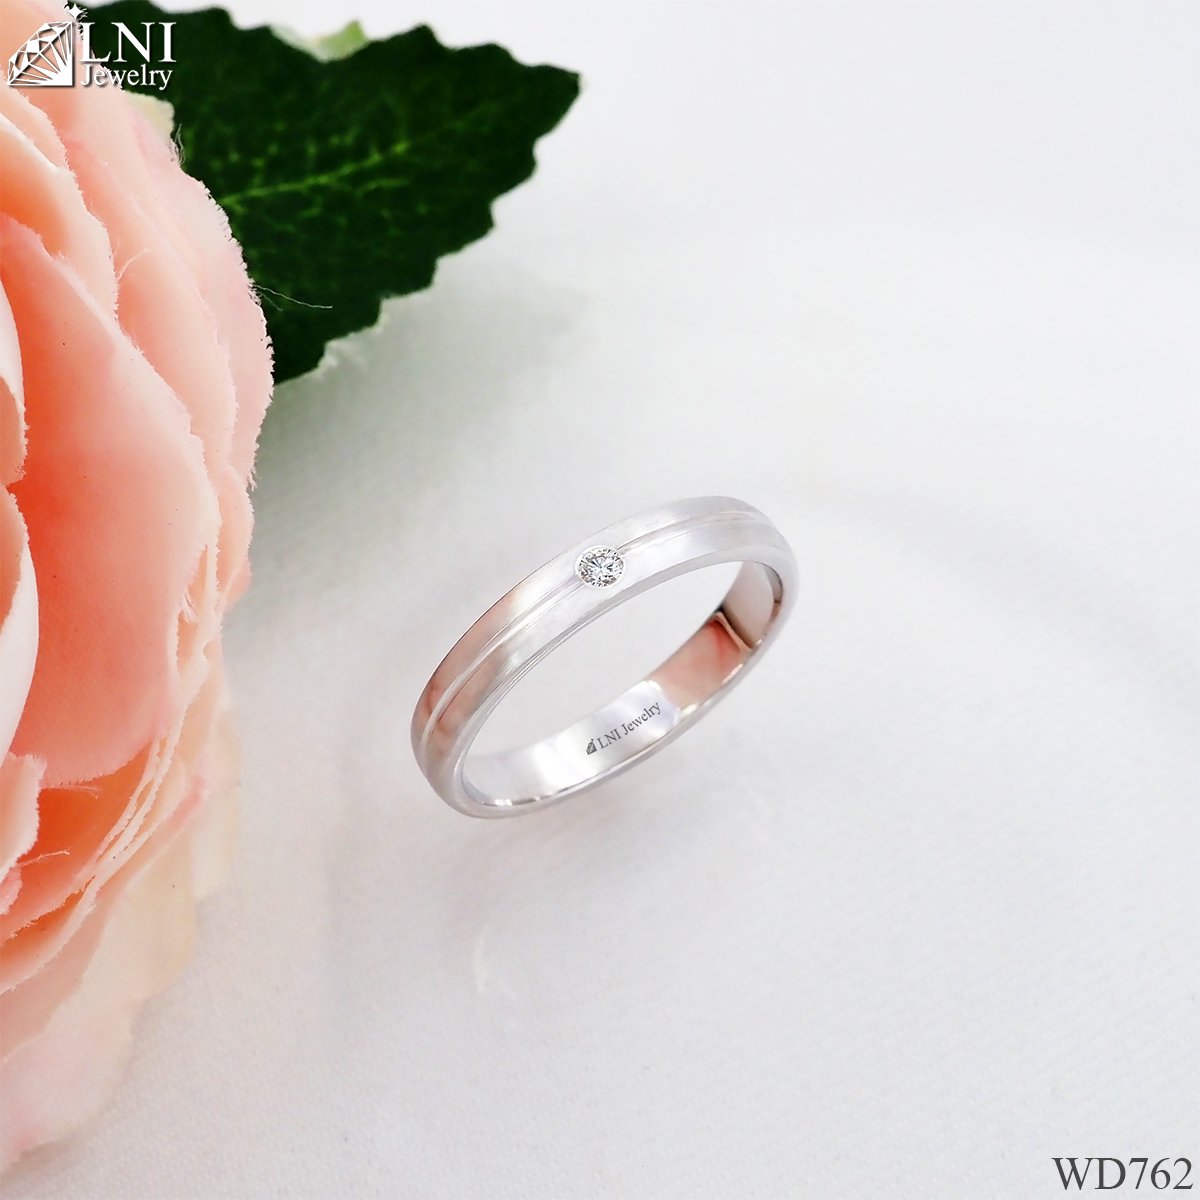 WD762 Single Diamond Ring